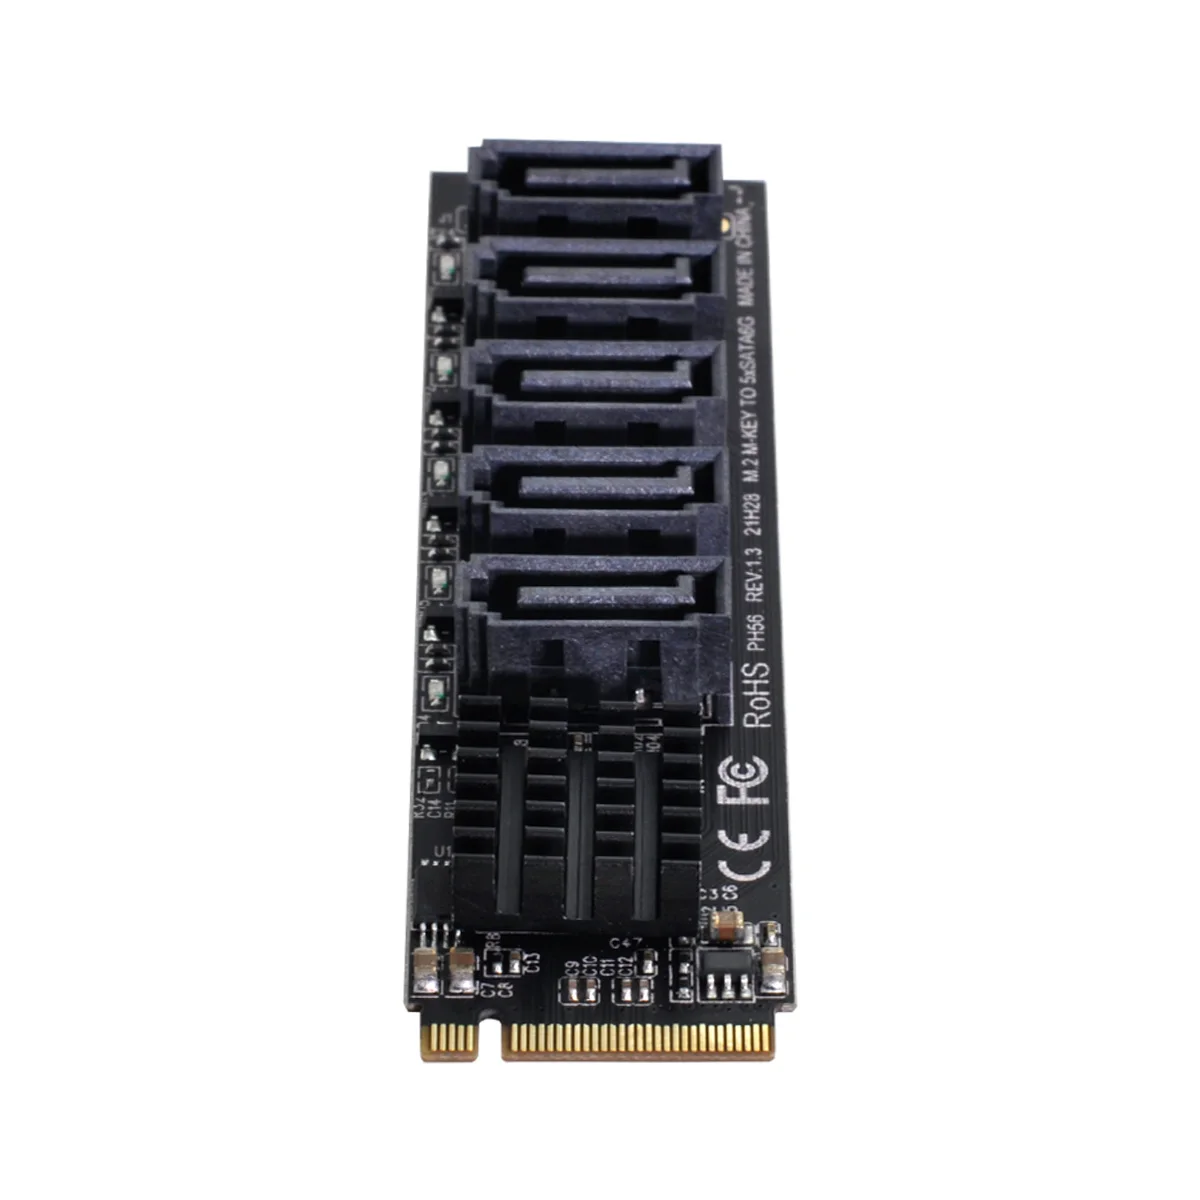 

Cablecc Converter Hard Drive NGFF NVME M-Key PCI Express to SATA 3.0 Extension Card JMB585 2280 6Gbps 5 Ports Adapter